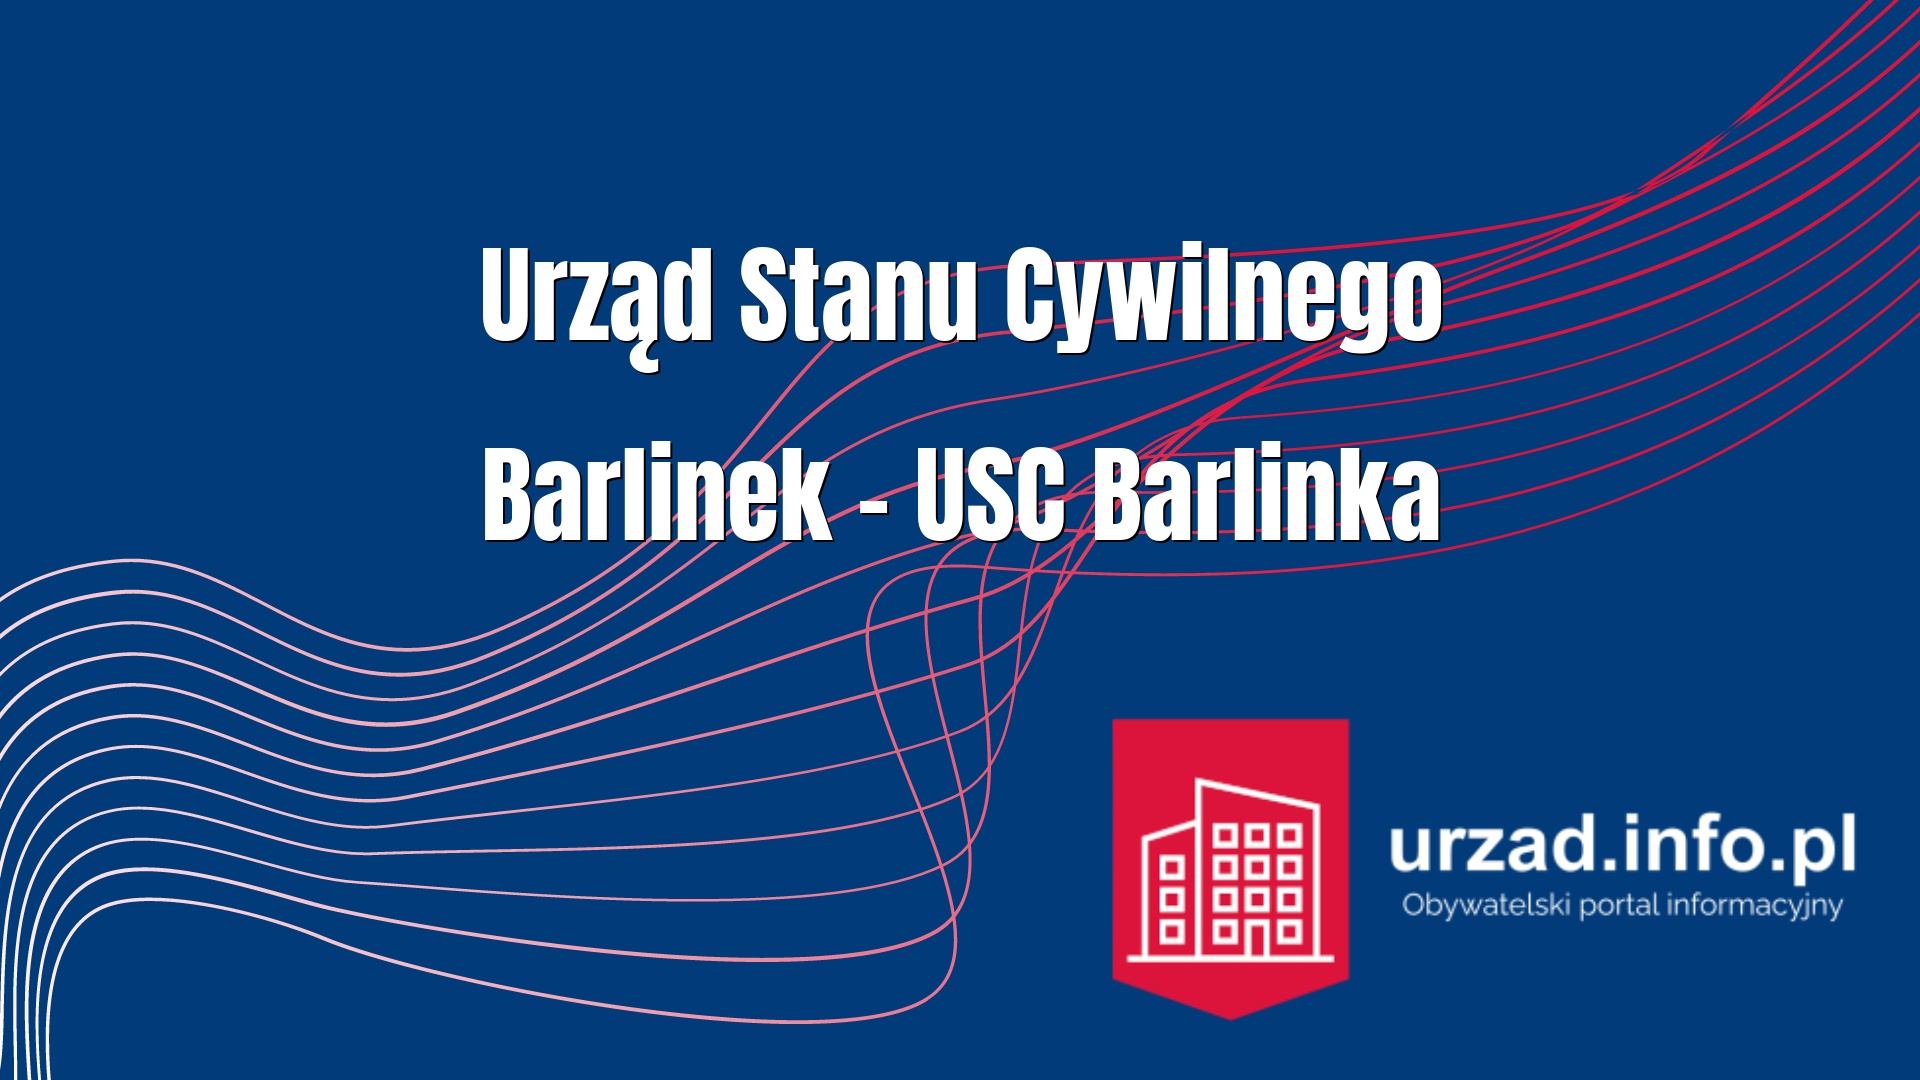 Urząd Stanu Cywilnego Barlinek – USC Barlinka